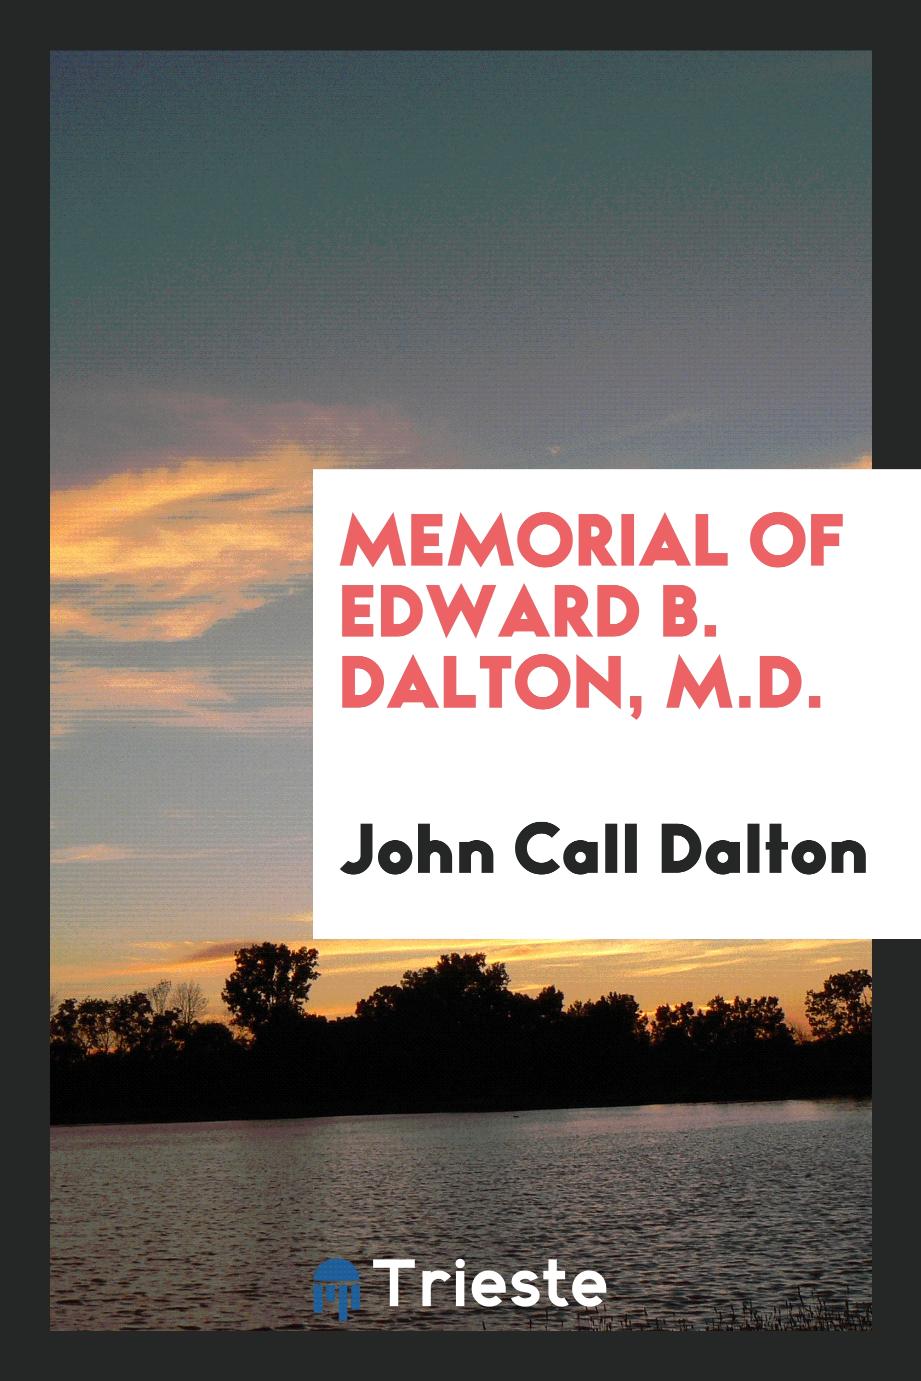 Memorial of Edward B. Dalton, M.D.